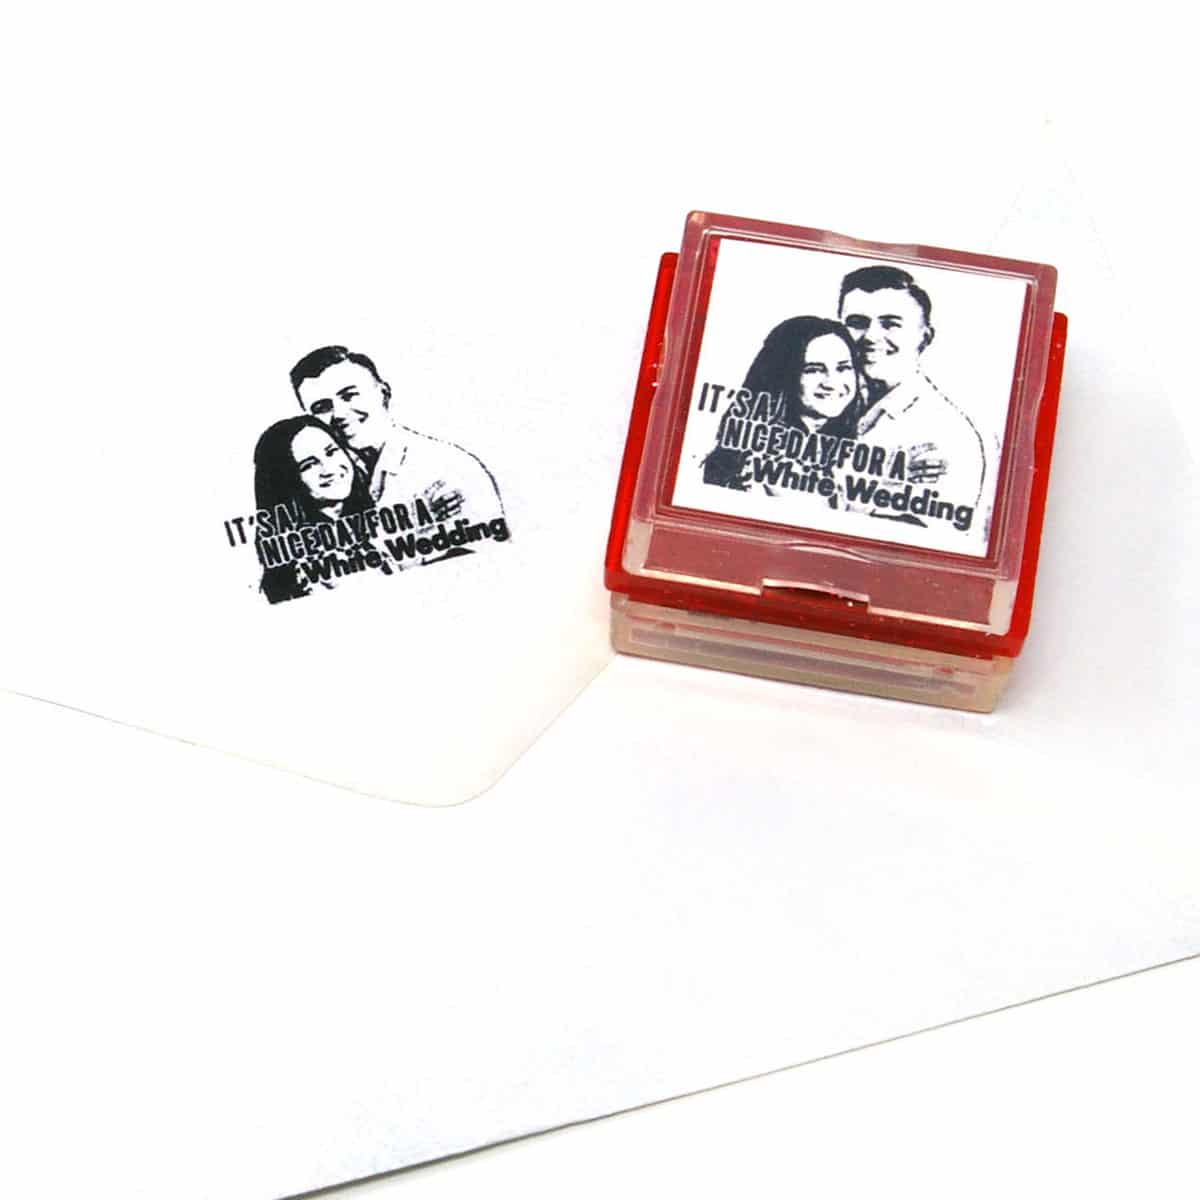 Wedding rubber stamp